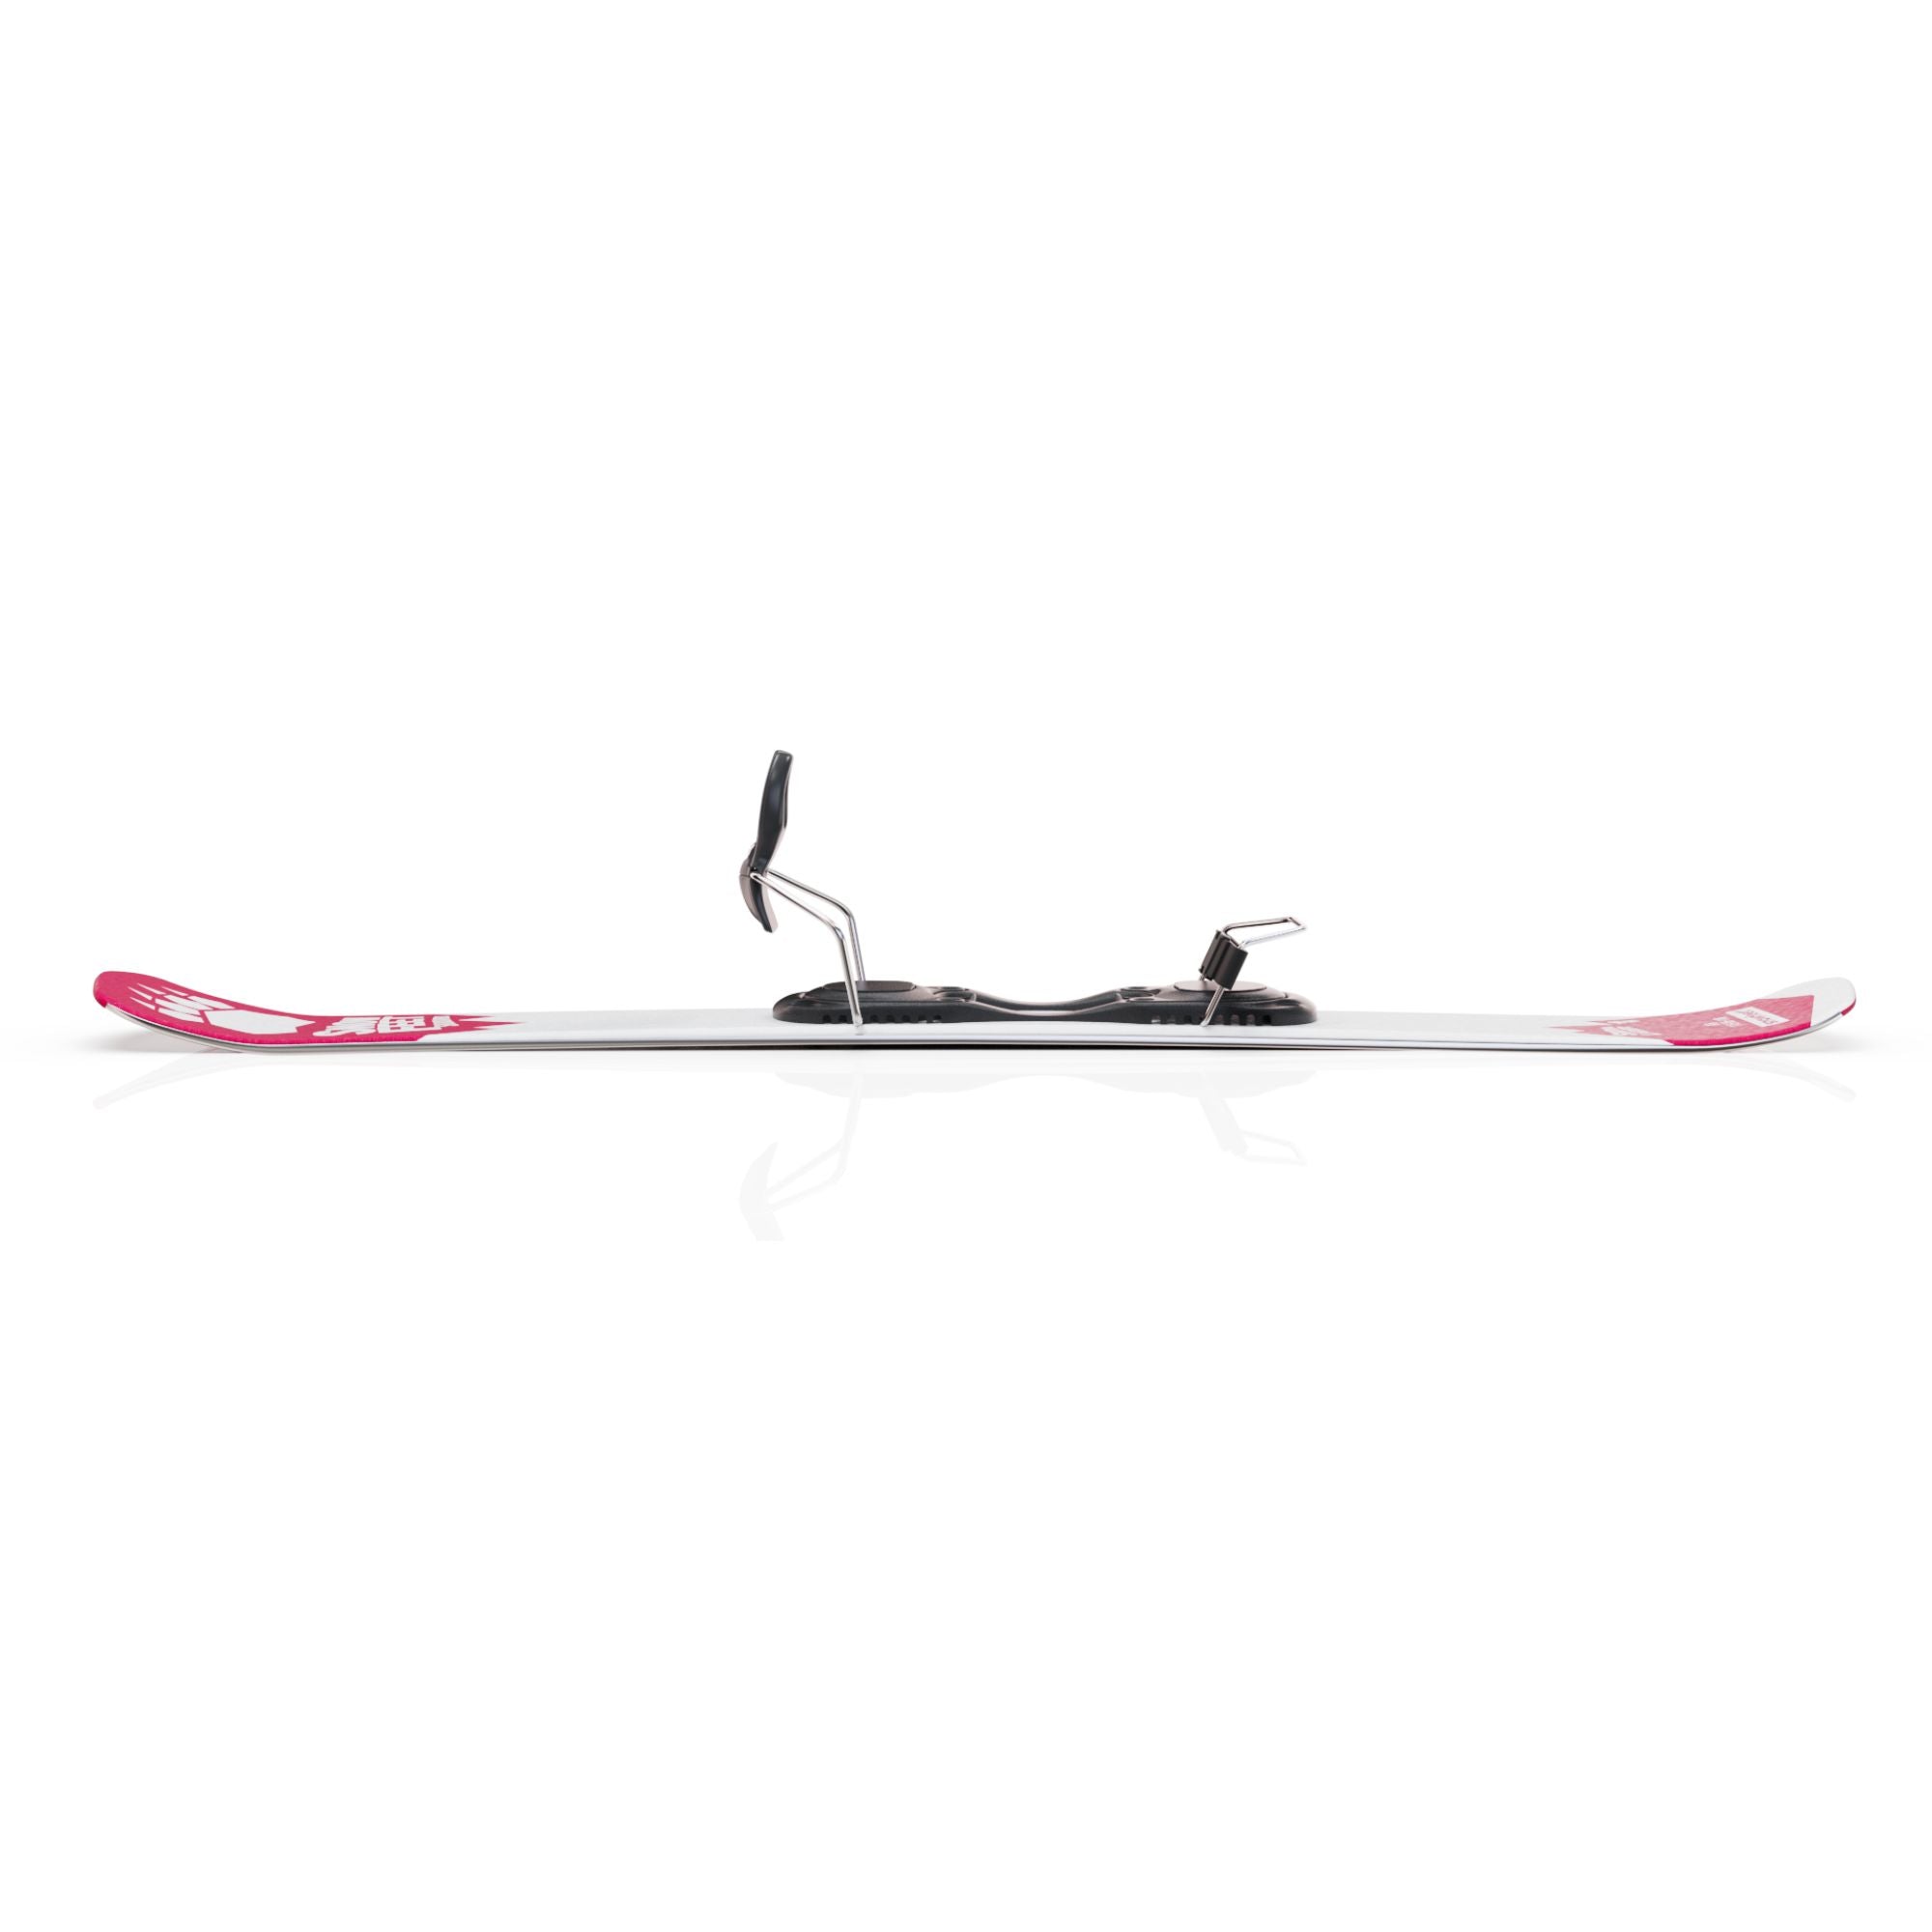 skiboards snowblades short ski 99 snowfeet mini little ski skiblades for ski with ski boot bindings pink